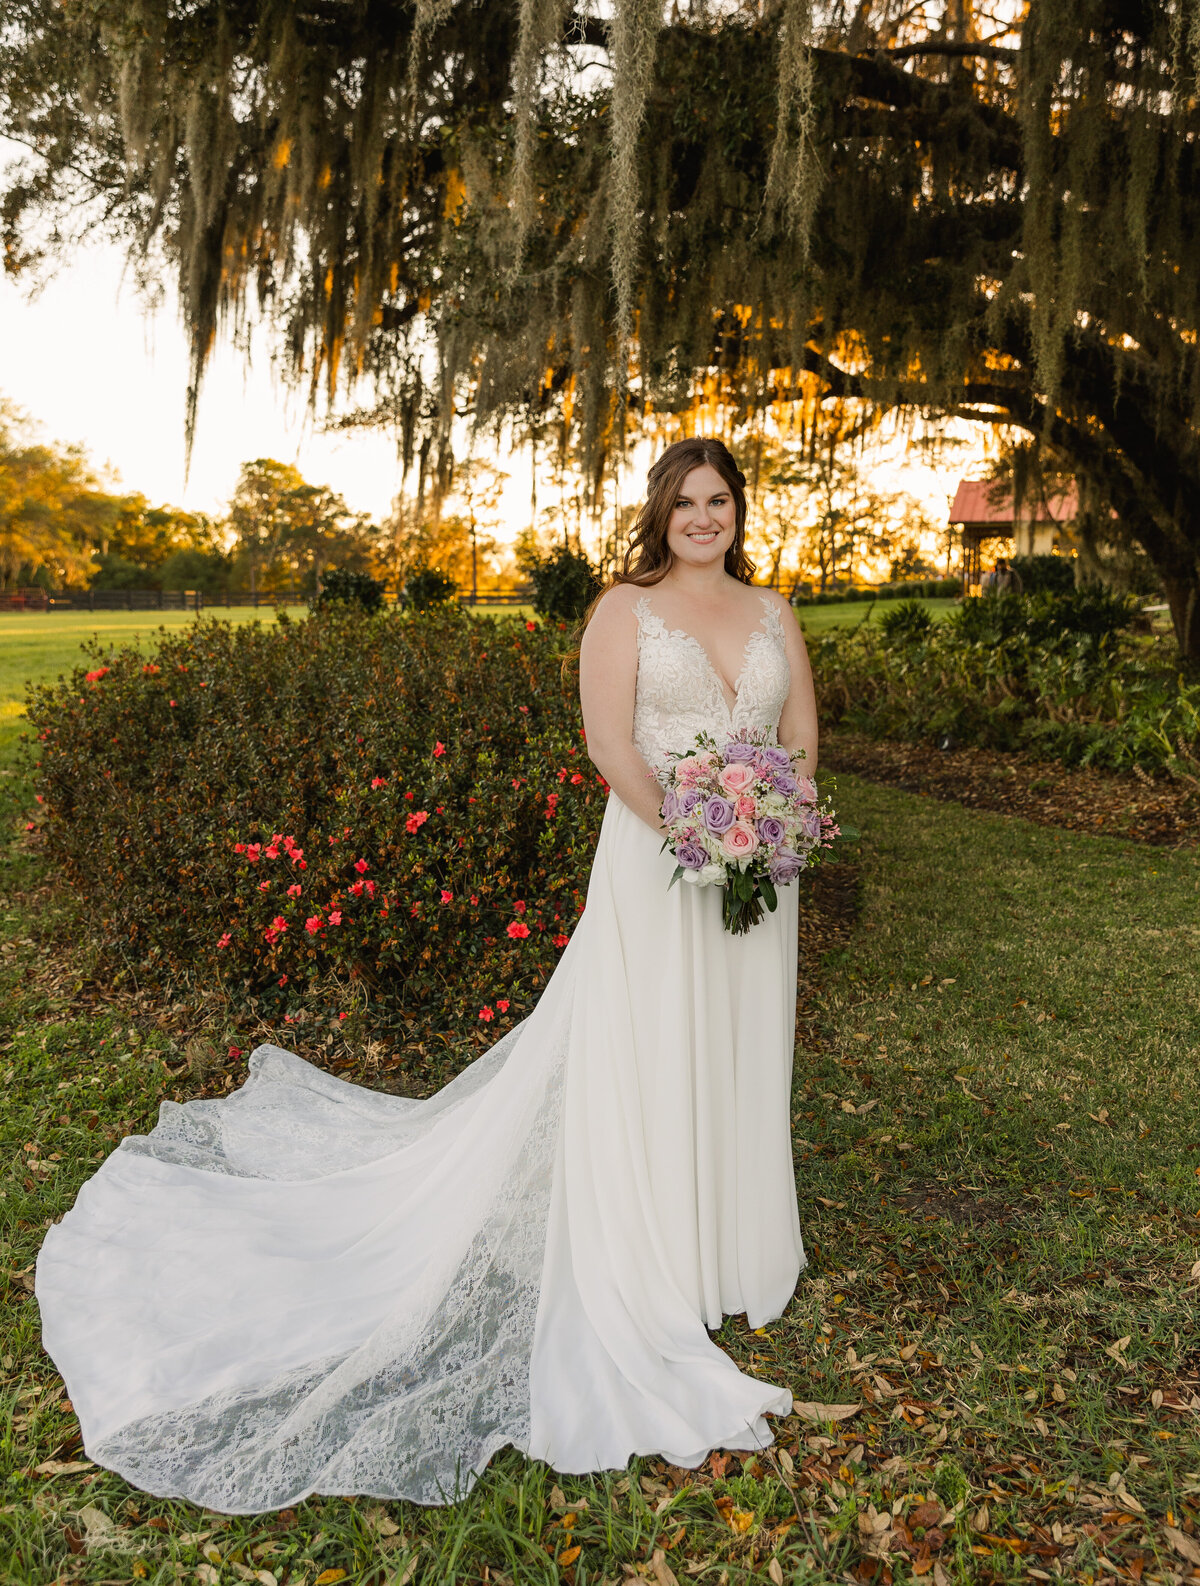 Bride Portrait at wedding Orlando Florida captured by Orlando Wedding Photographer Blak Marie Photography